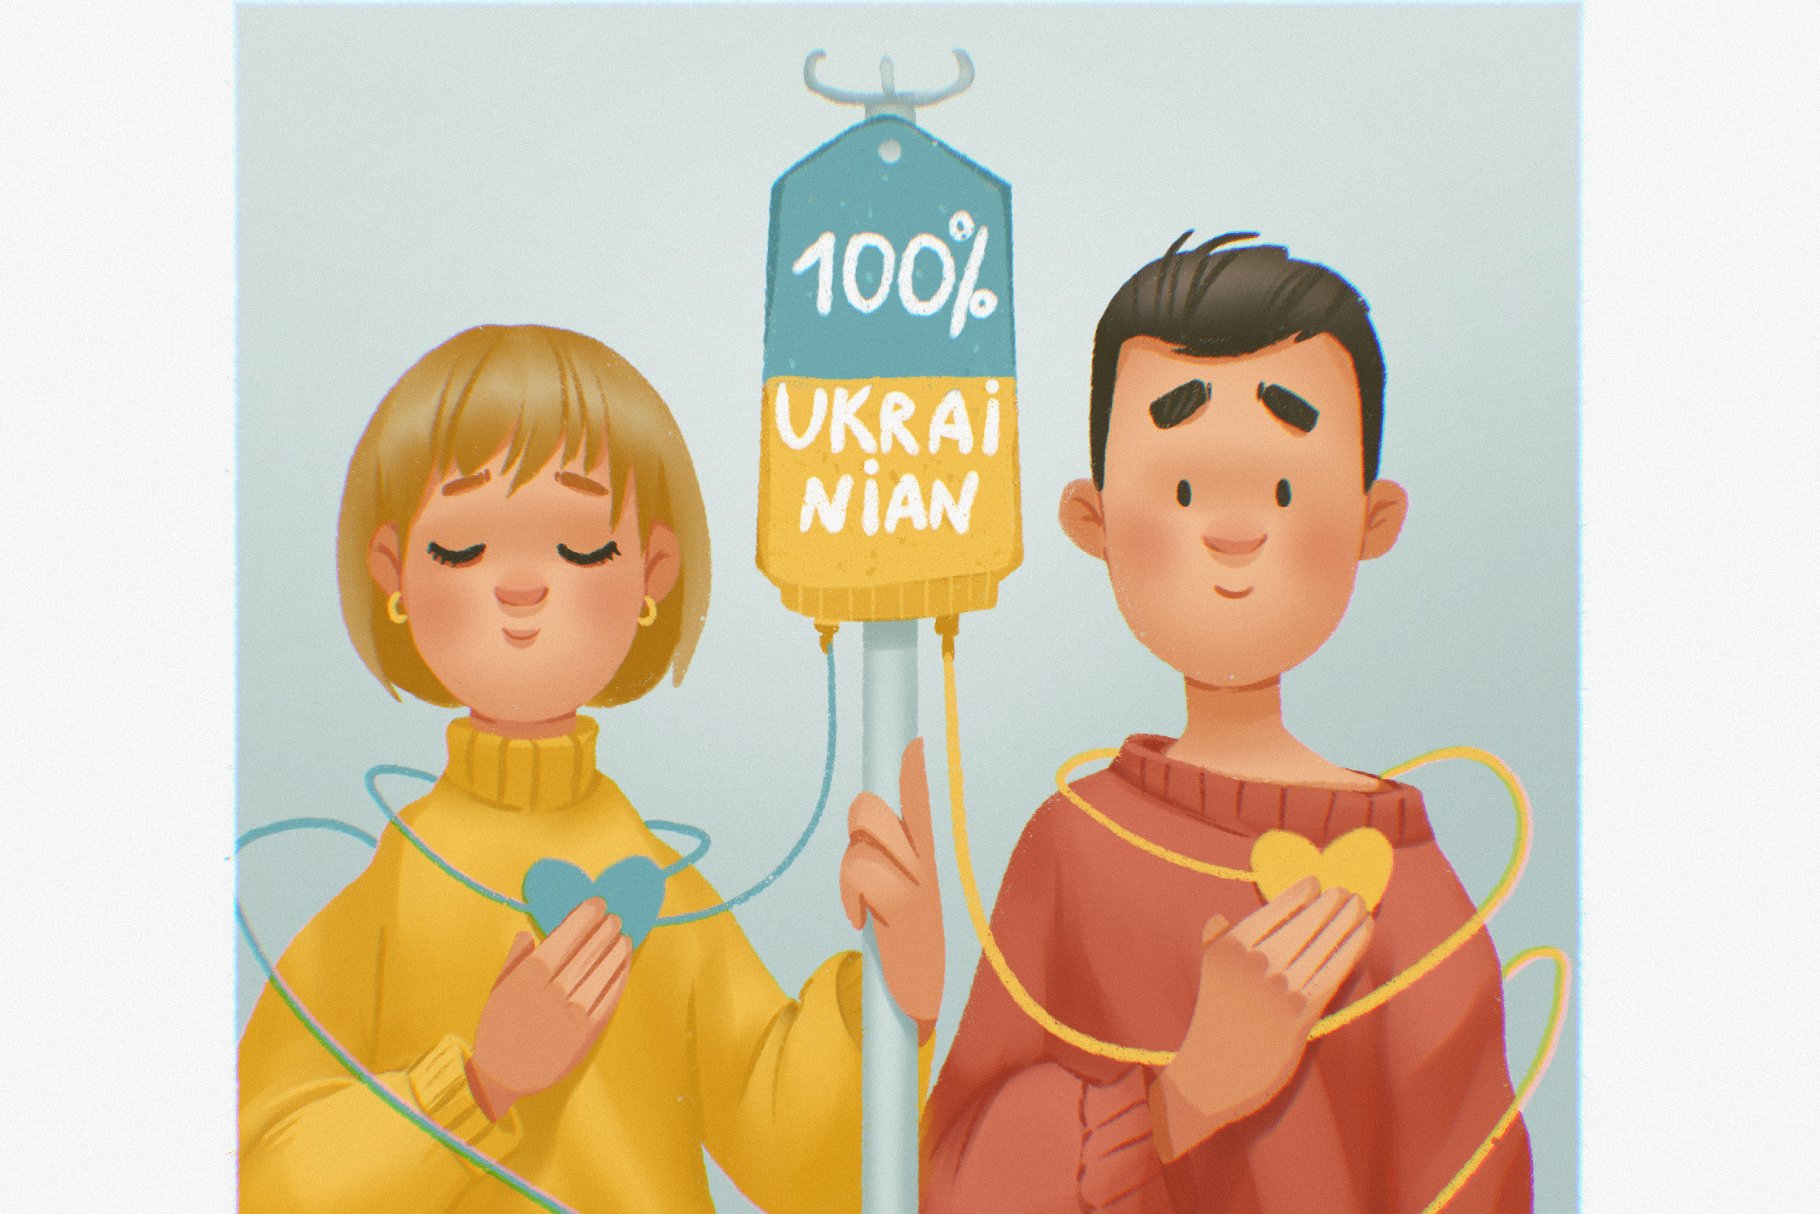 100% Ukrainian HIGH RES cover image.